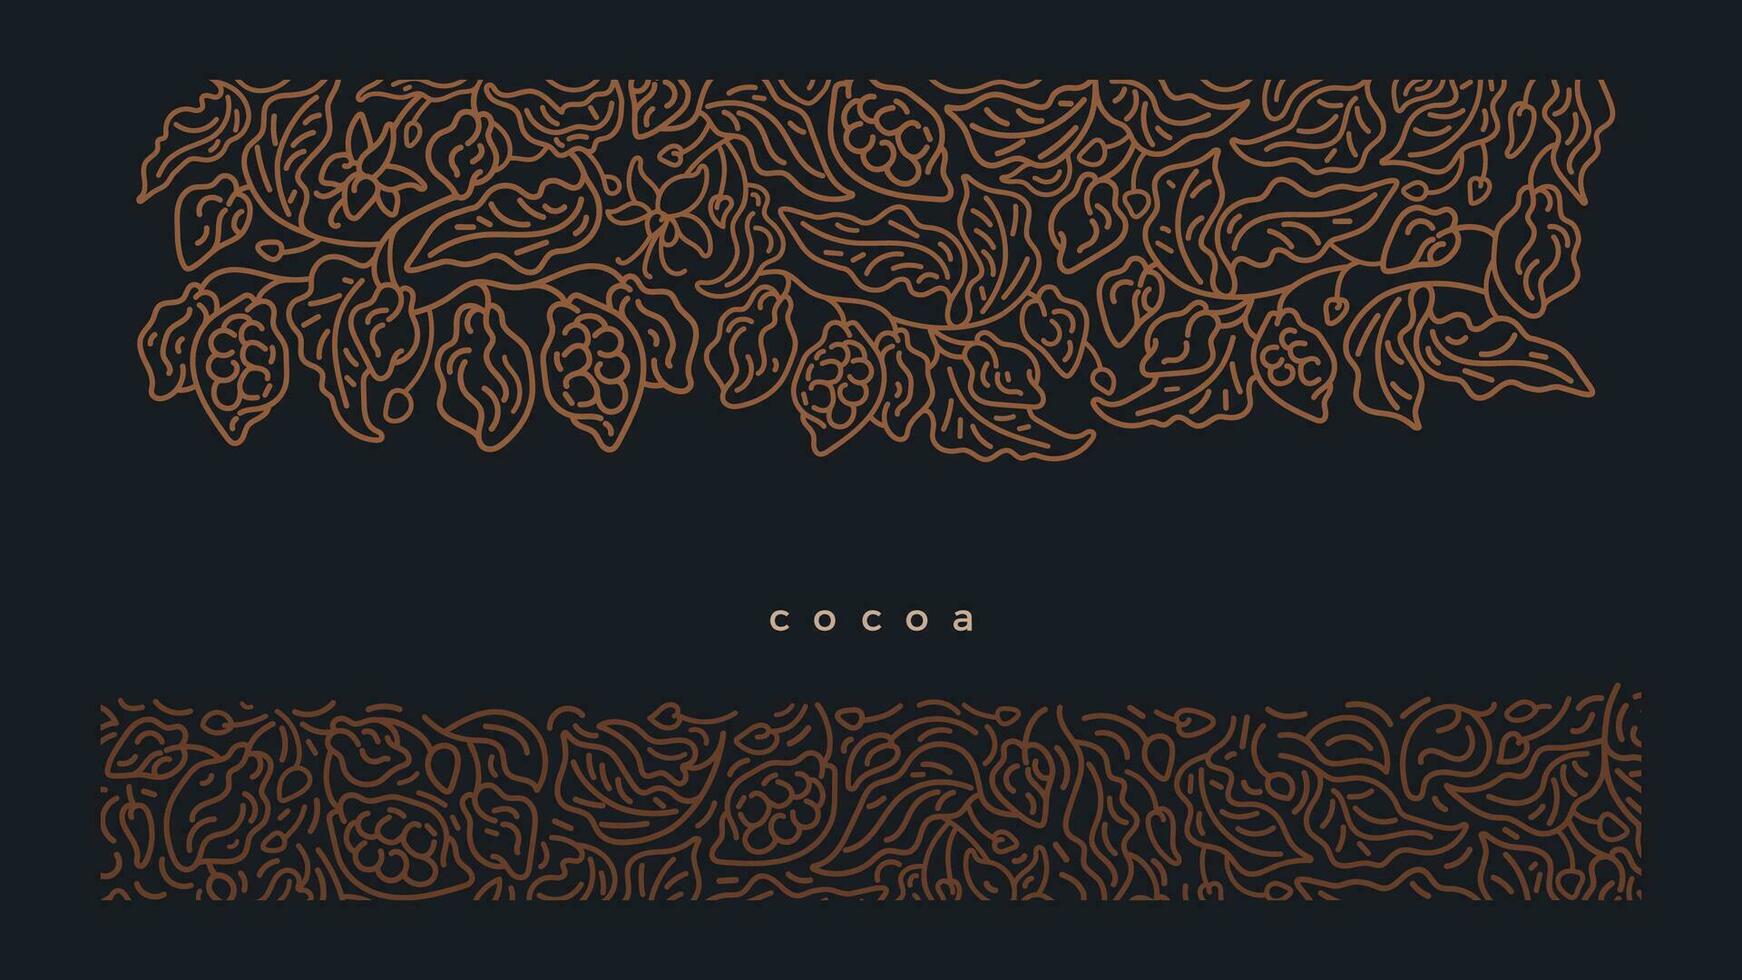 Cocoa golden border on black background. Art line vector